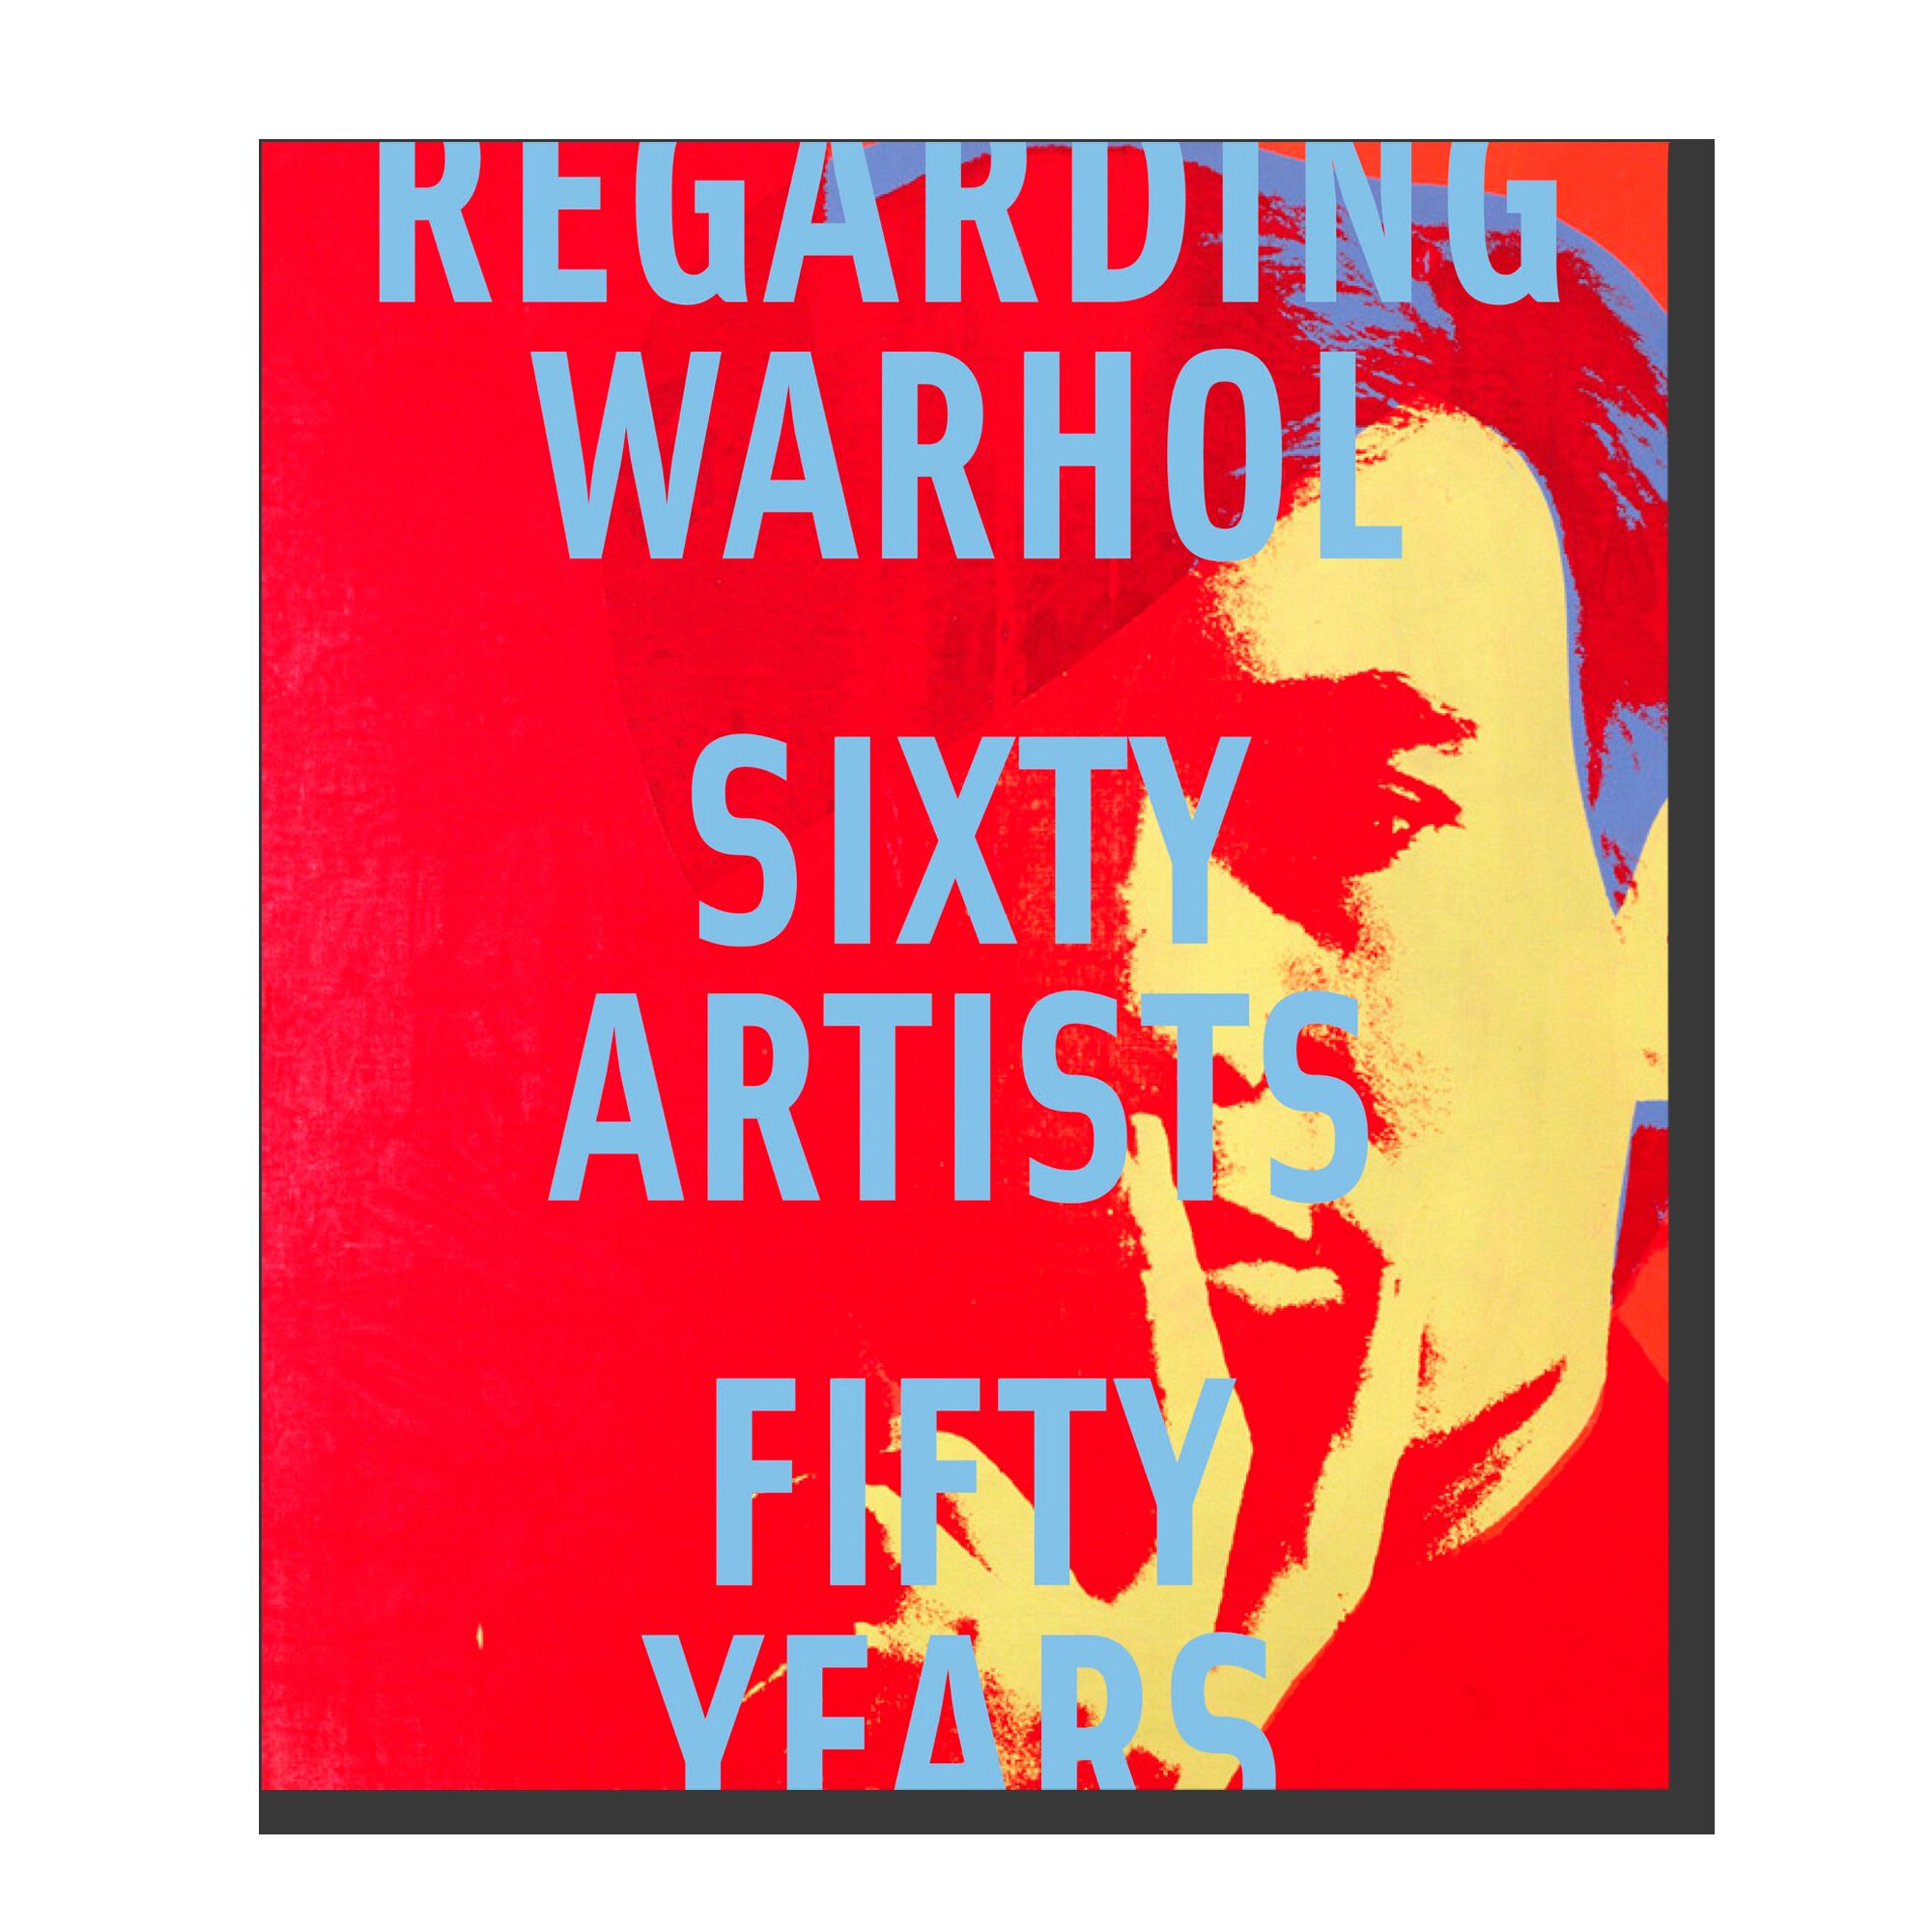 Regarding Warhol: Sixty Artists, Fifty Years